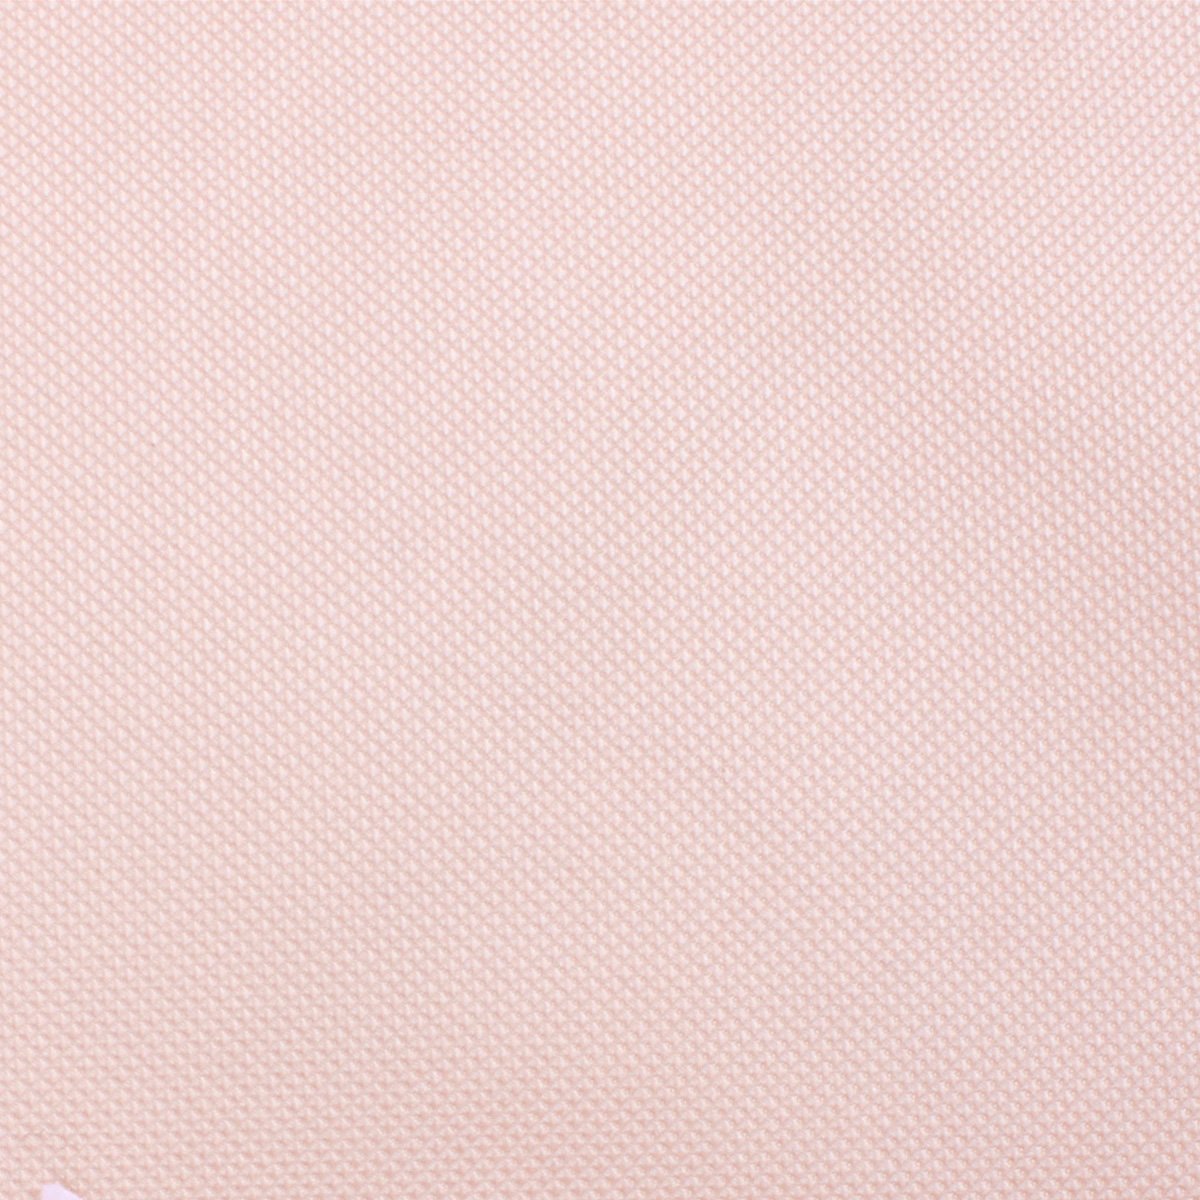 Liege Blush Pink Diamond Fabric Swatch